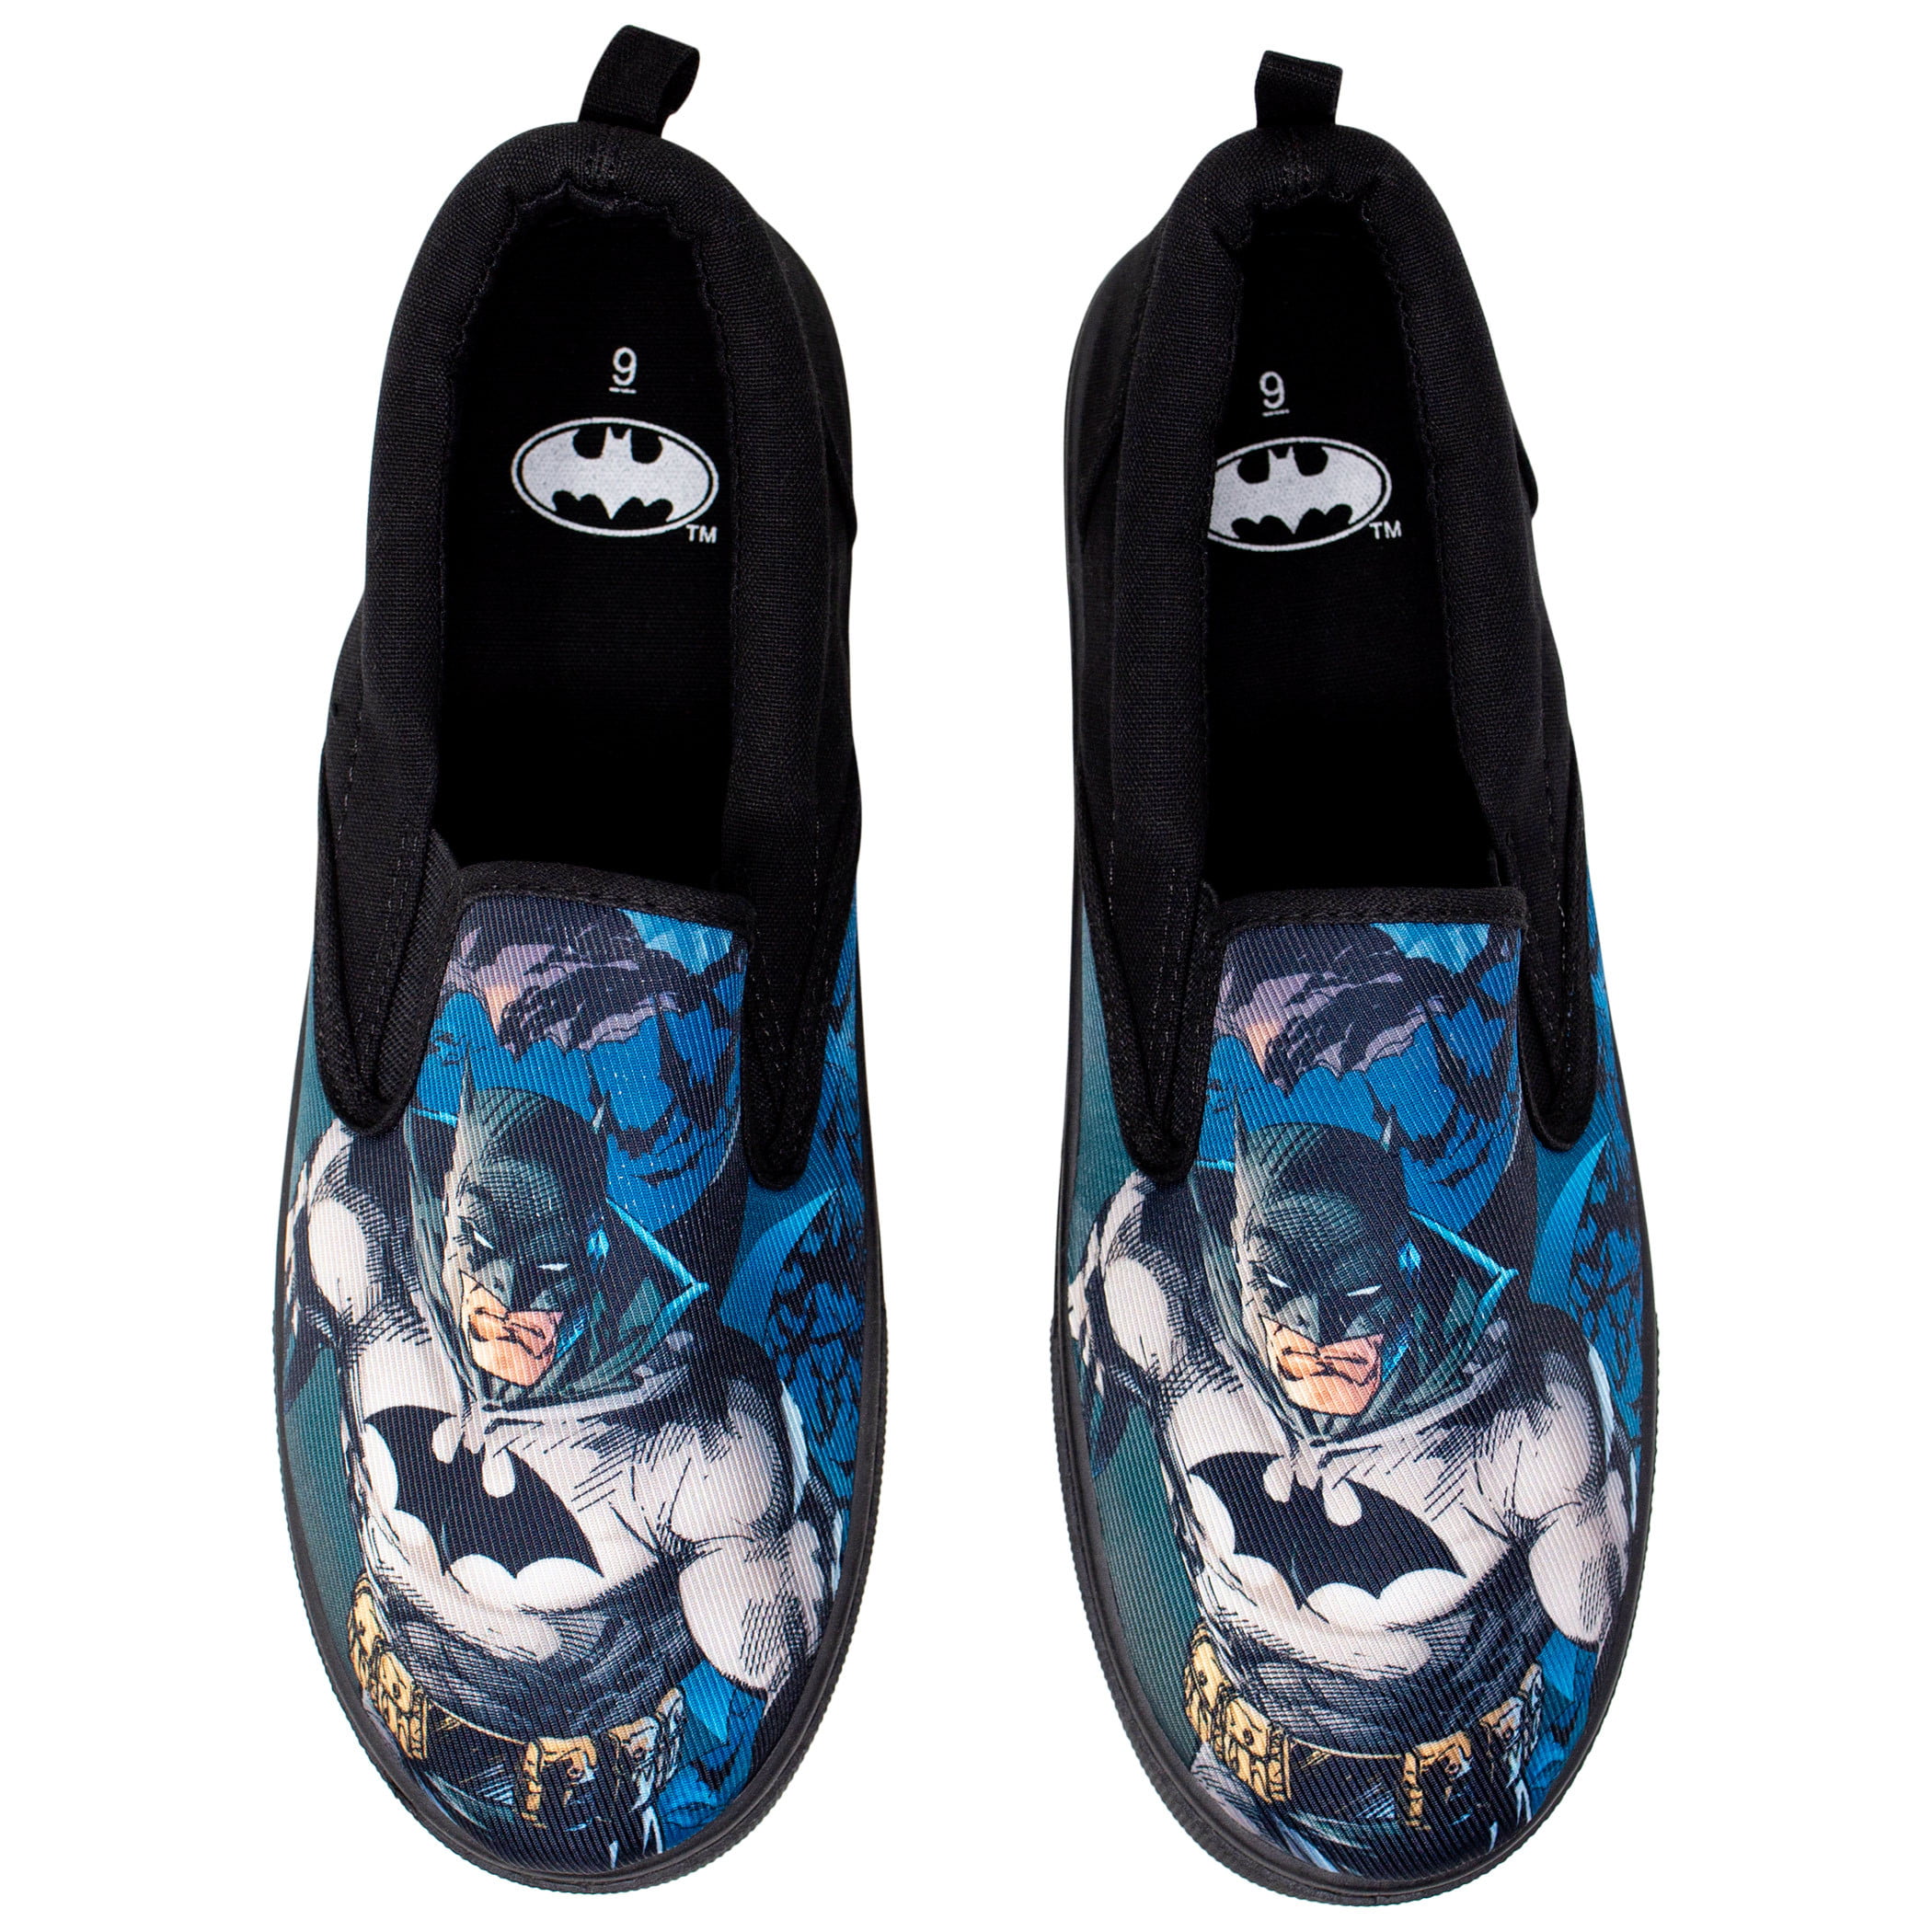 Batman Hush Image Deck Shoes-Size 11 Walmart.com